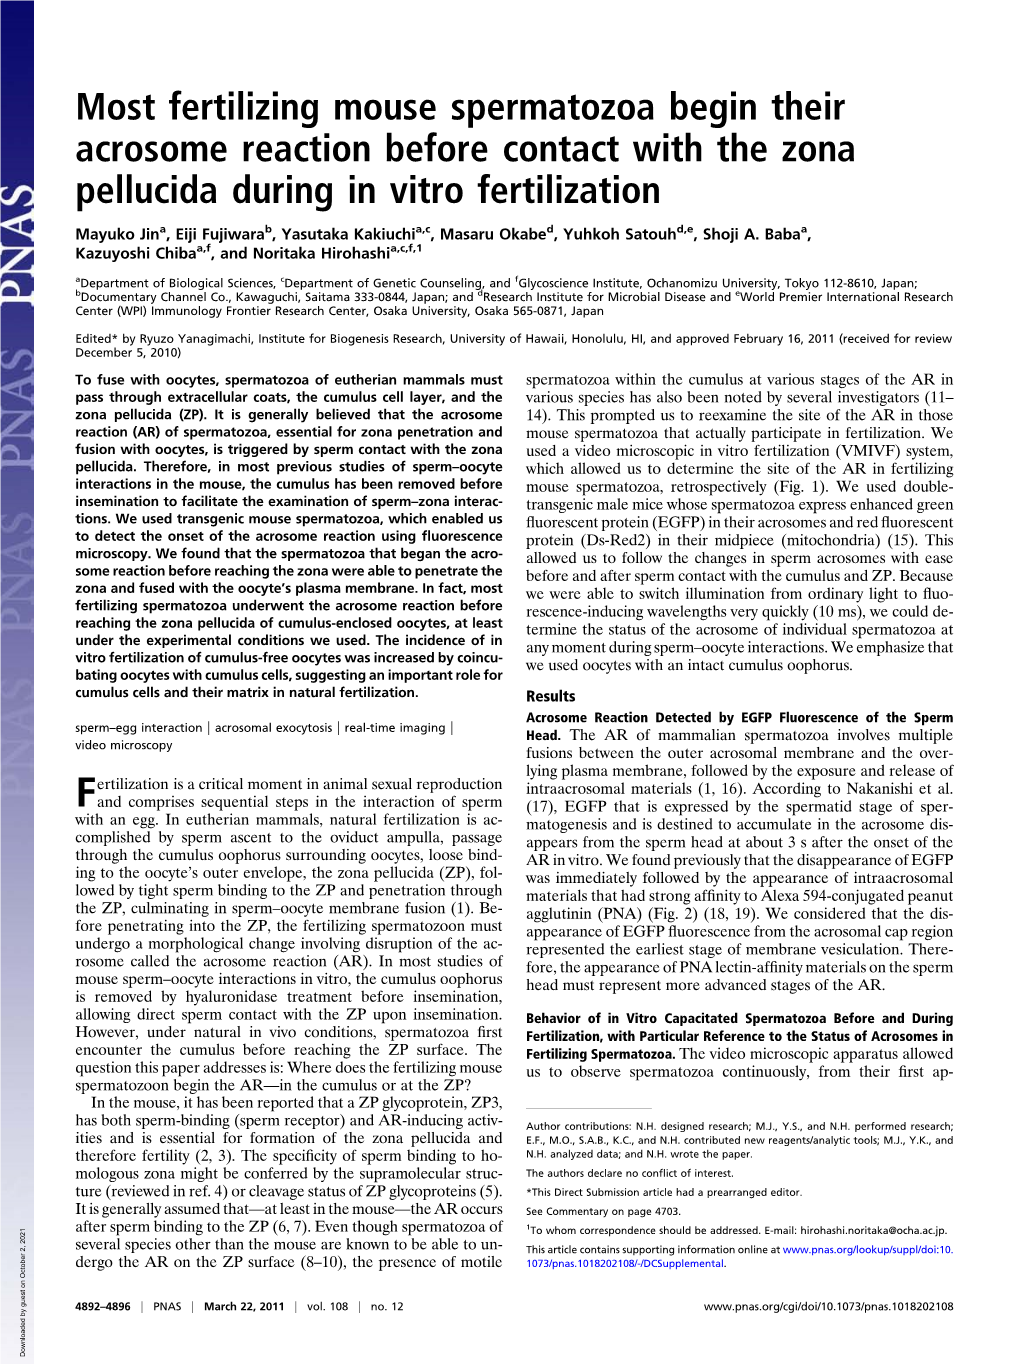 Most Fertilizing Mouse Spermatozoa Begin Their Acrosome Reaction Before Contact with the Zona Pellucida During in Vitro Fertilization